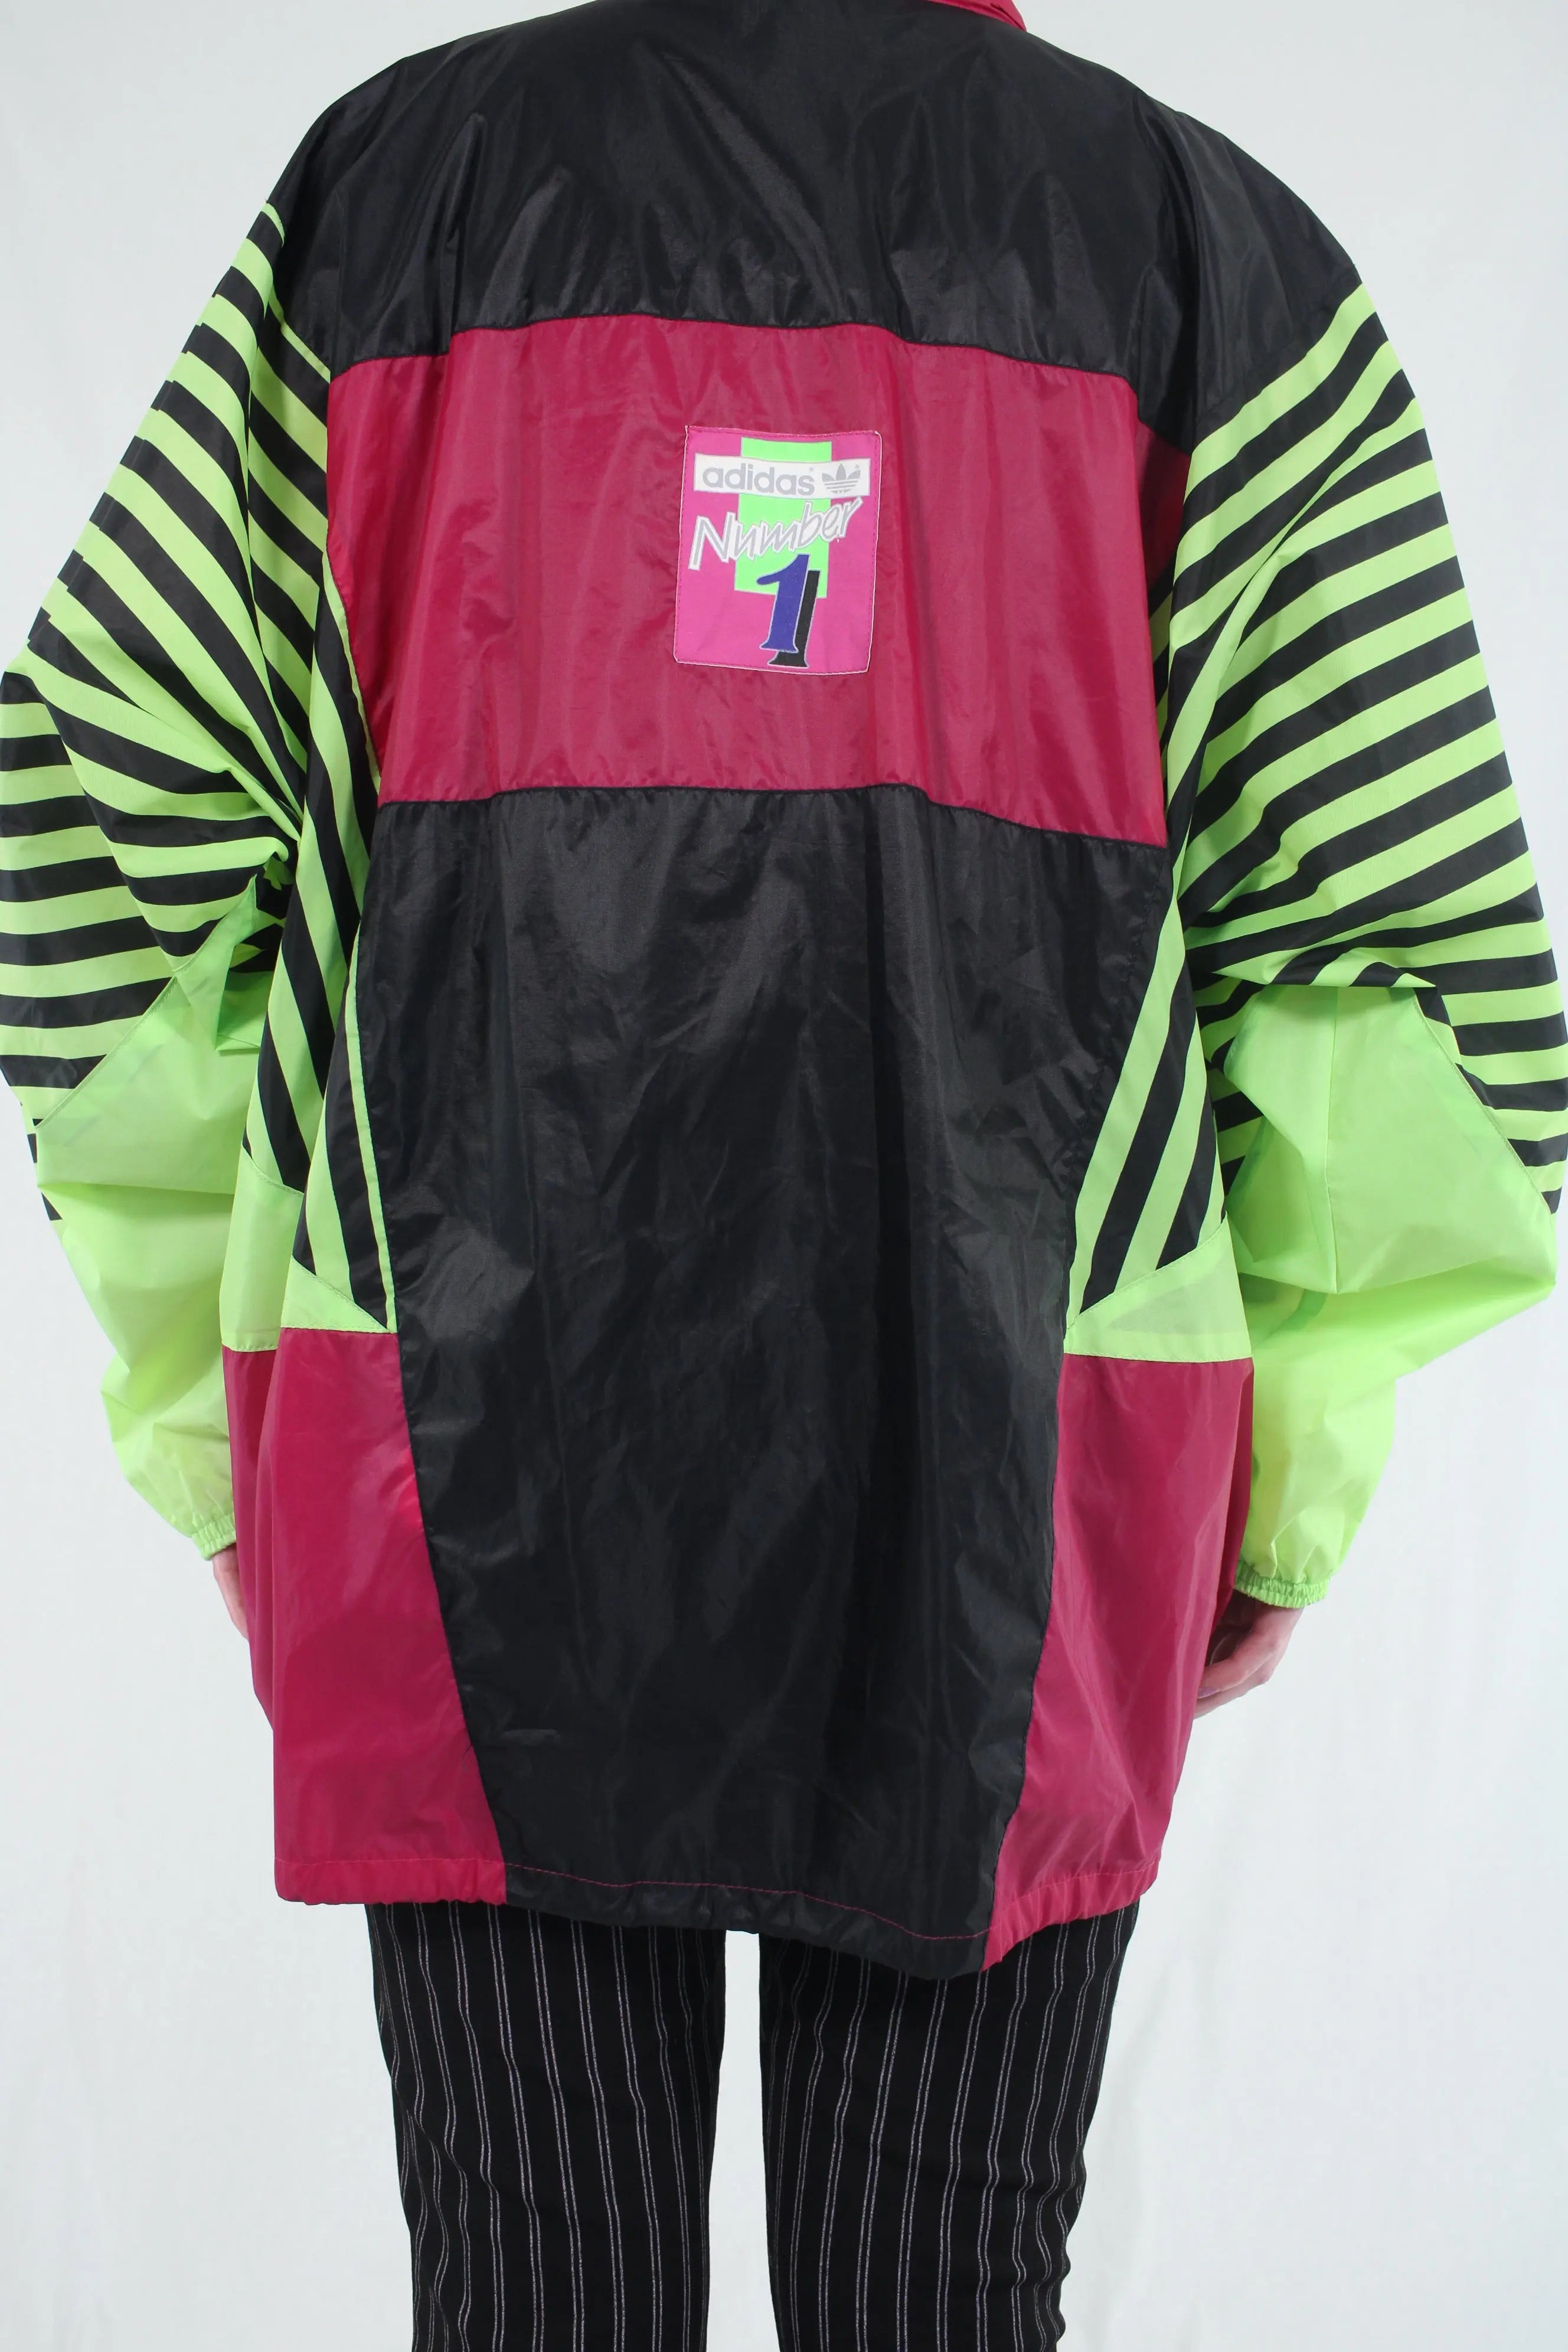 Adidas - 80/90s Adidas Rain Jacket- ThriftTale.com - Vintage and second handclothing